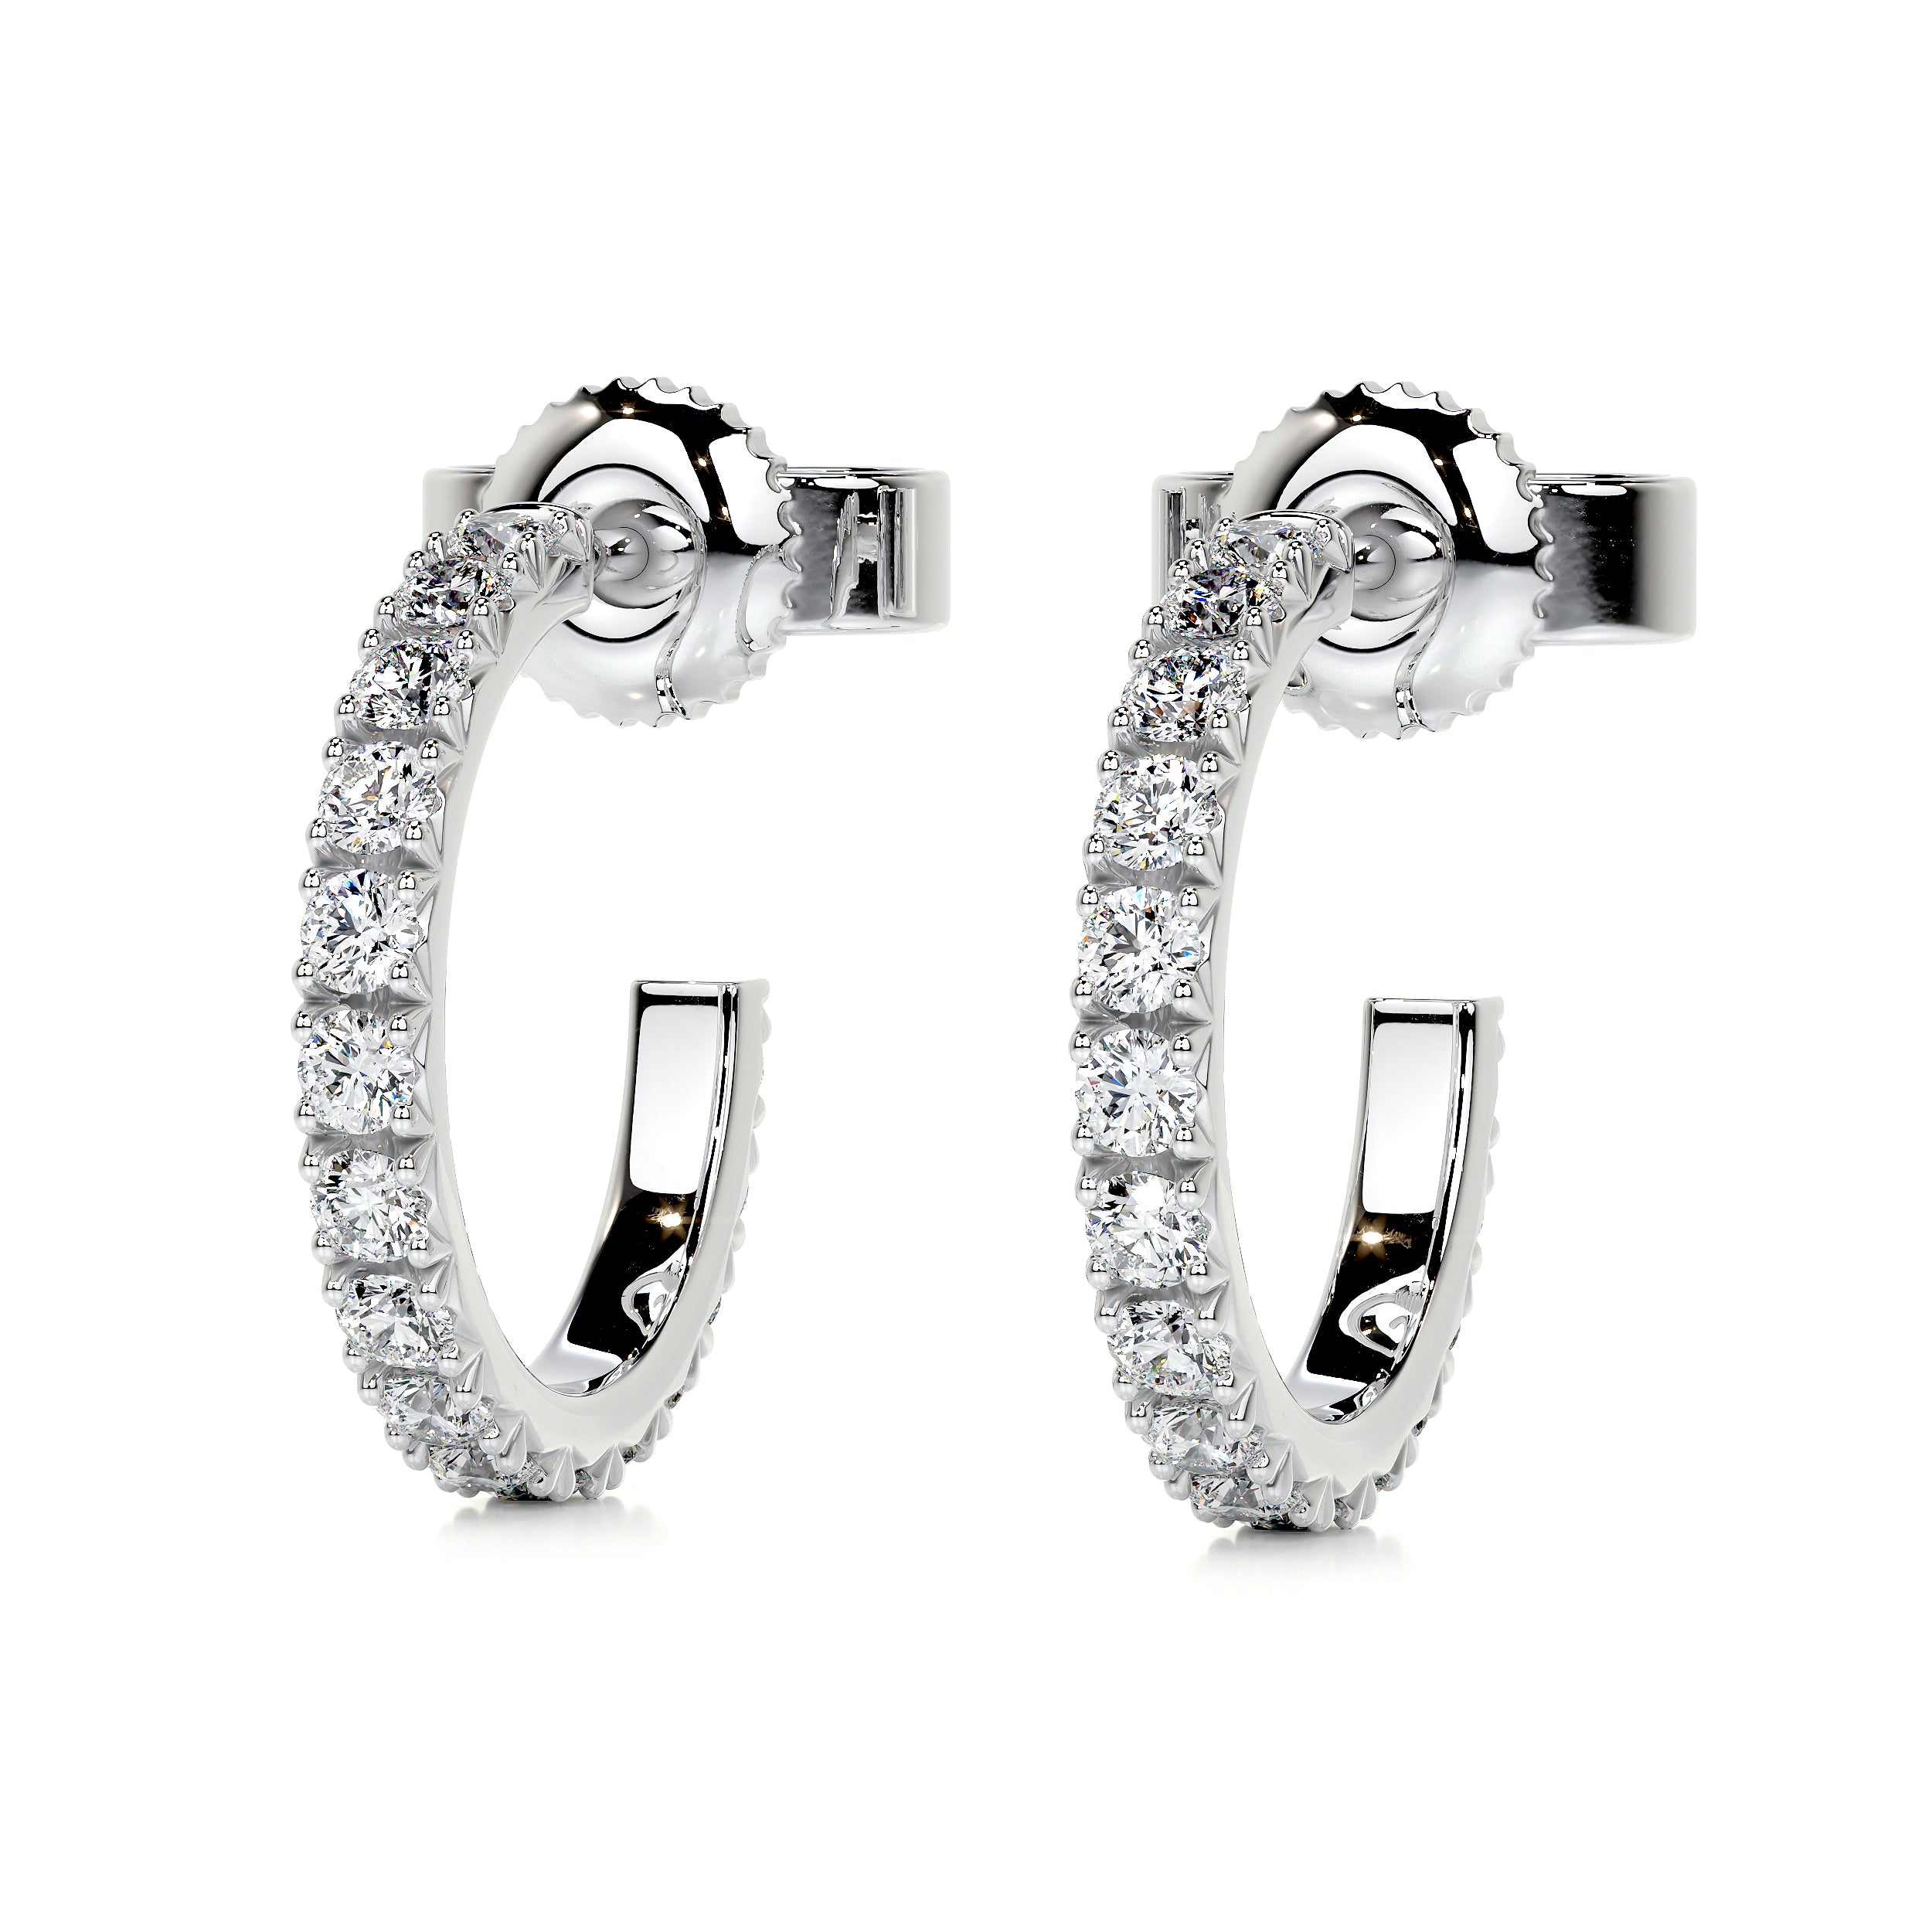 Nicole Diamond Earrings   (2.5 Carat) -18K White Gold